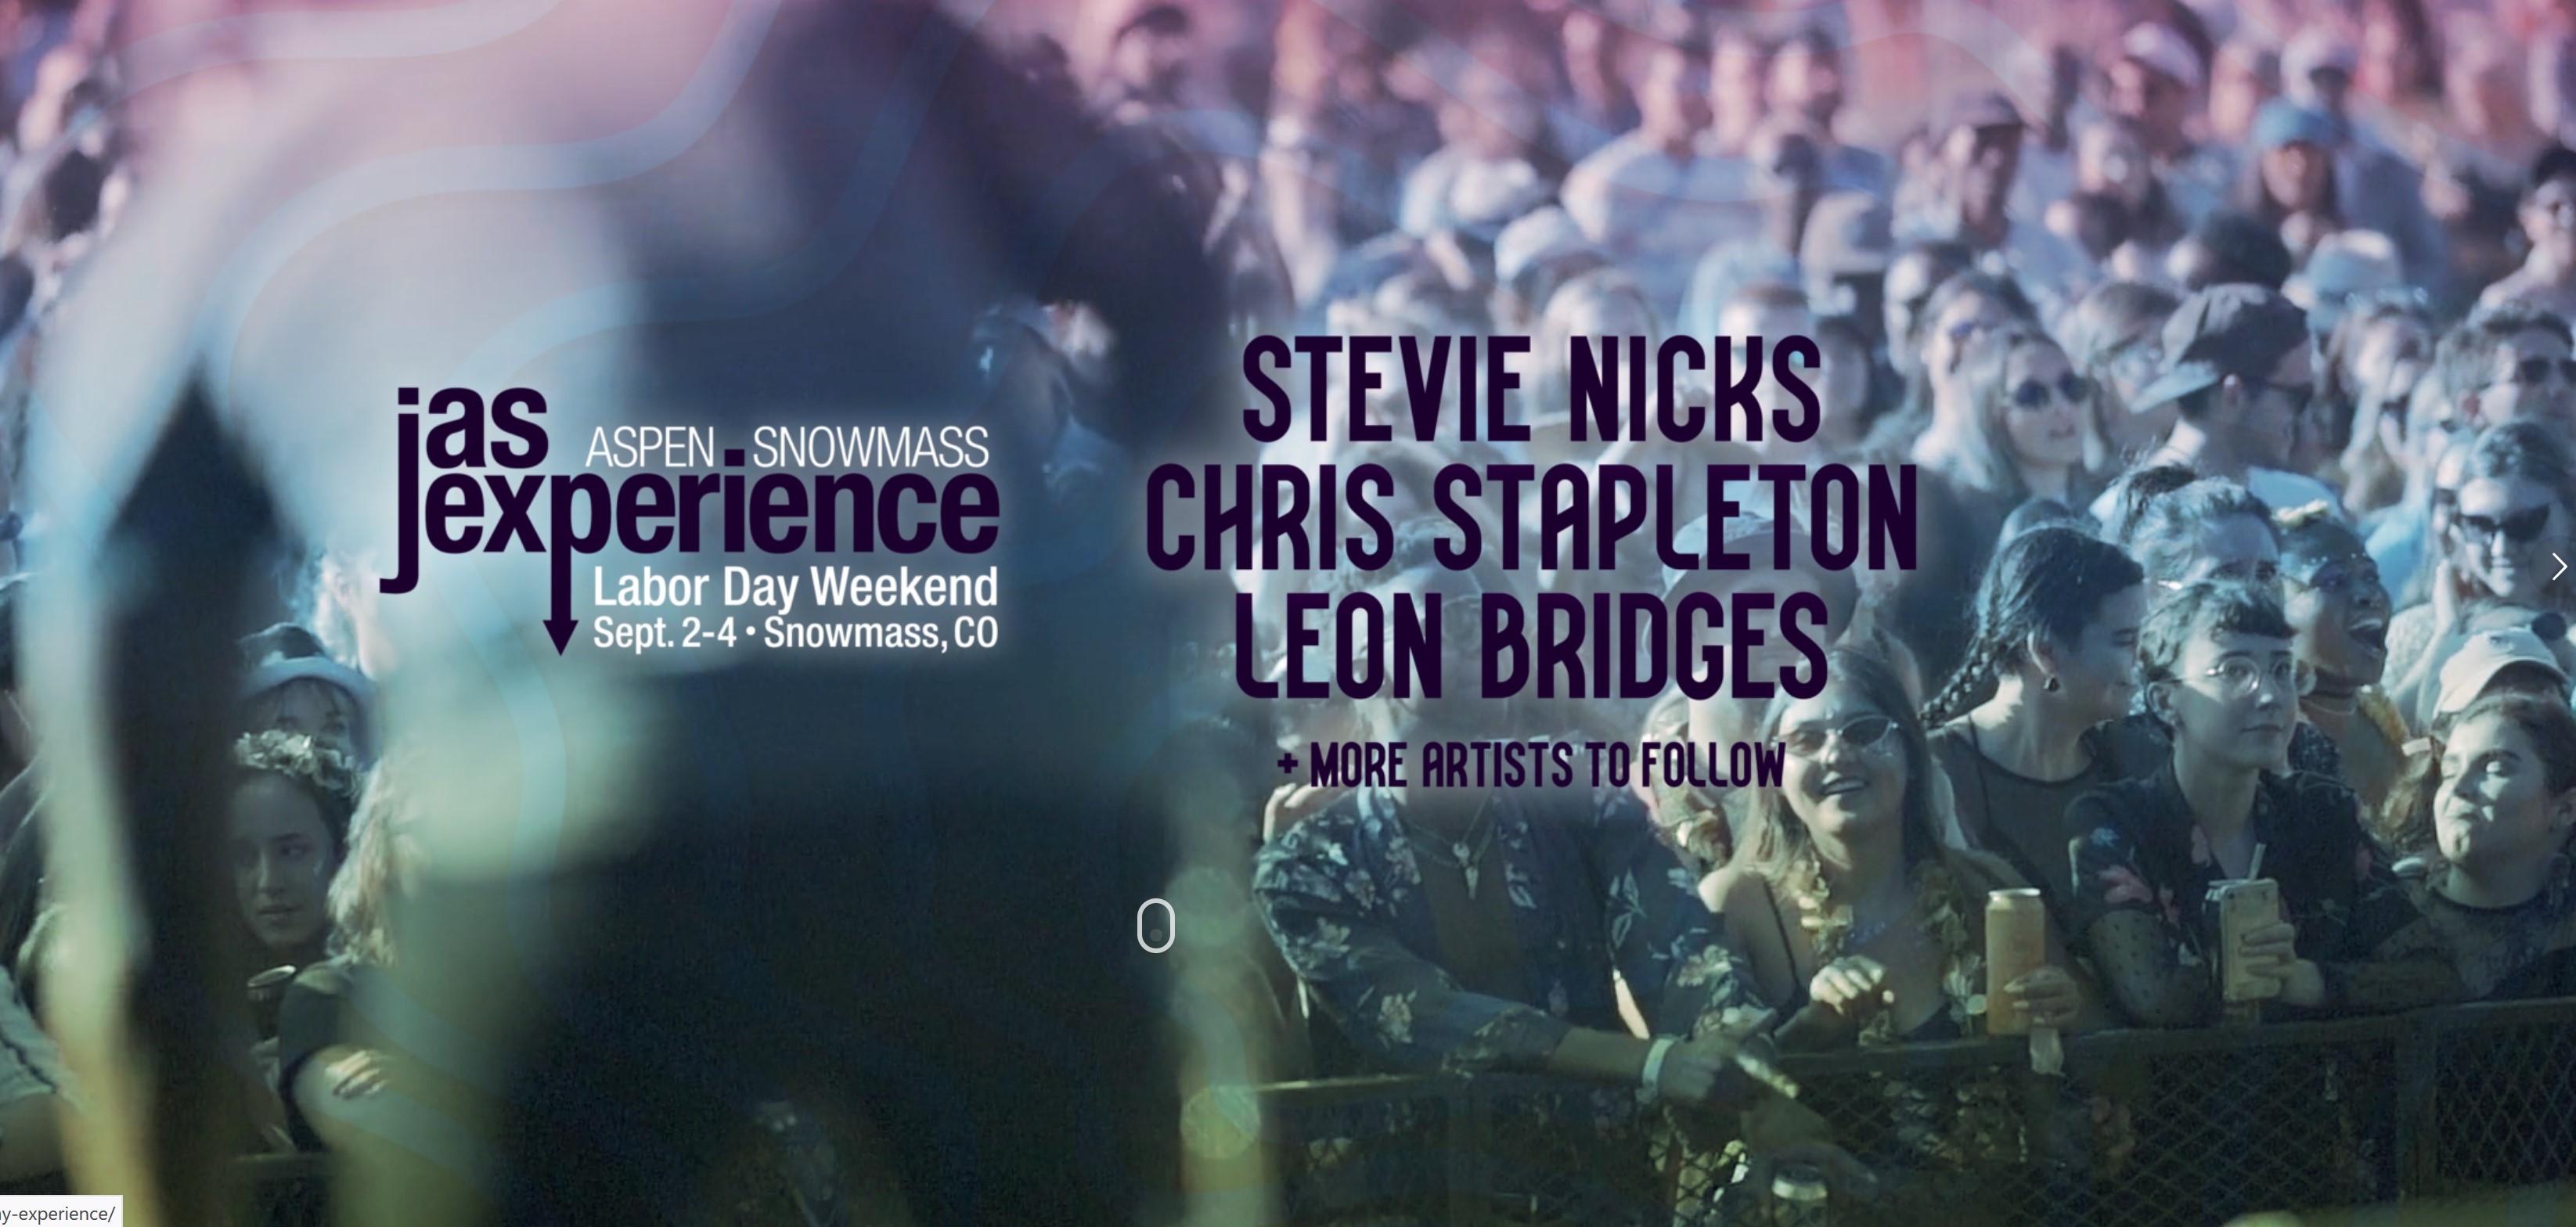 Stevie Nicks, Chris Stapleton & Leon Bridges To Headline Jazz Aspen Snowmass